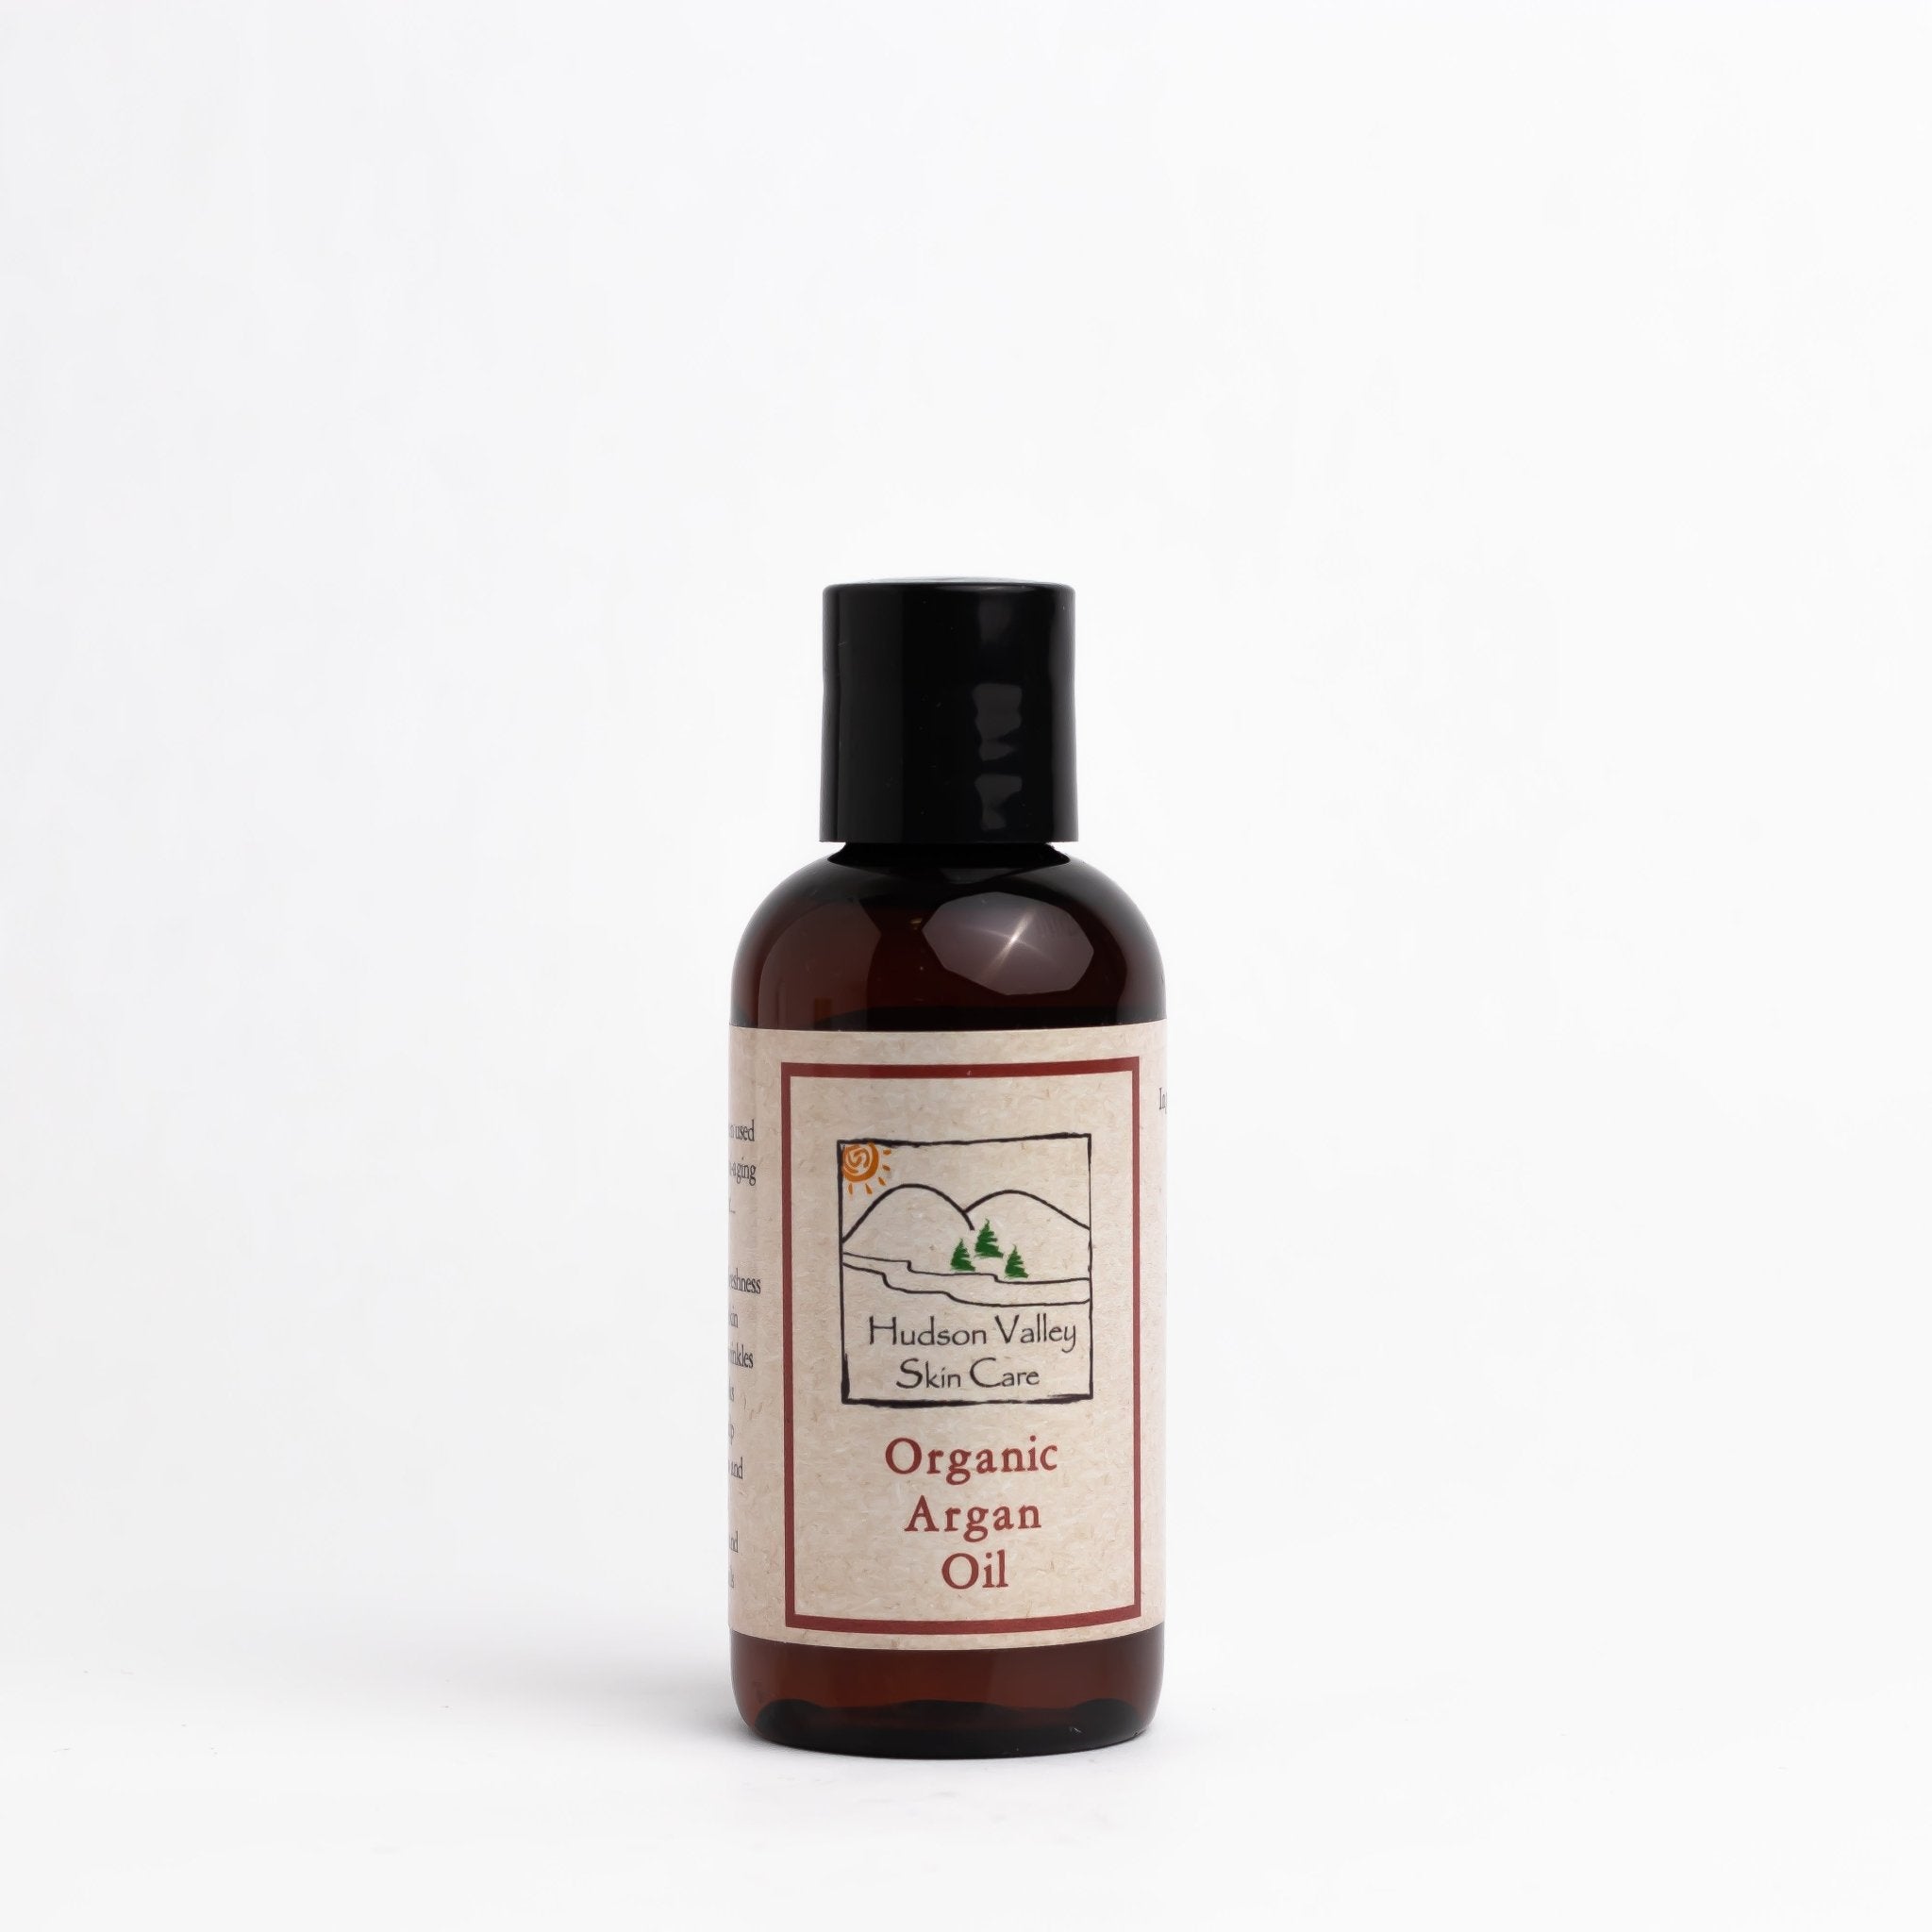 Organic Argan Oil - Hudson Valley Skin Care